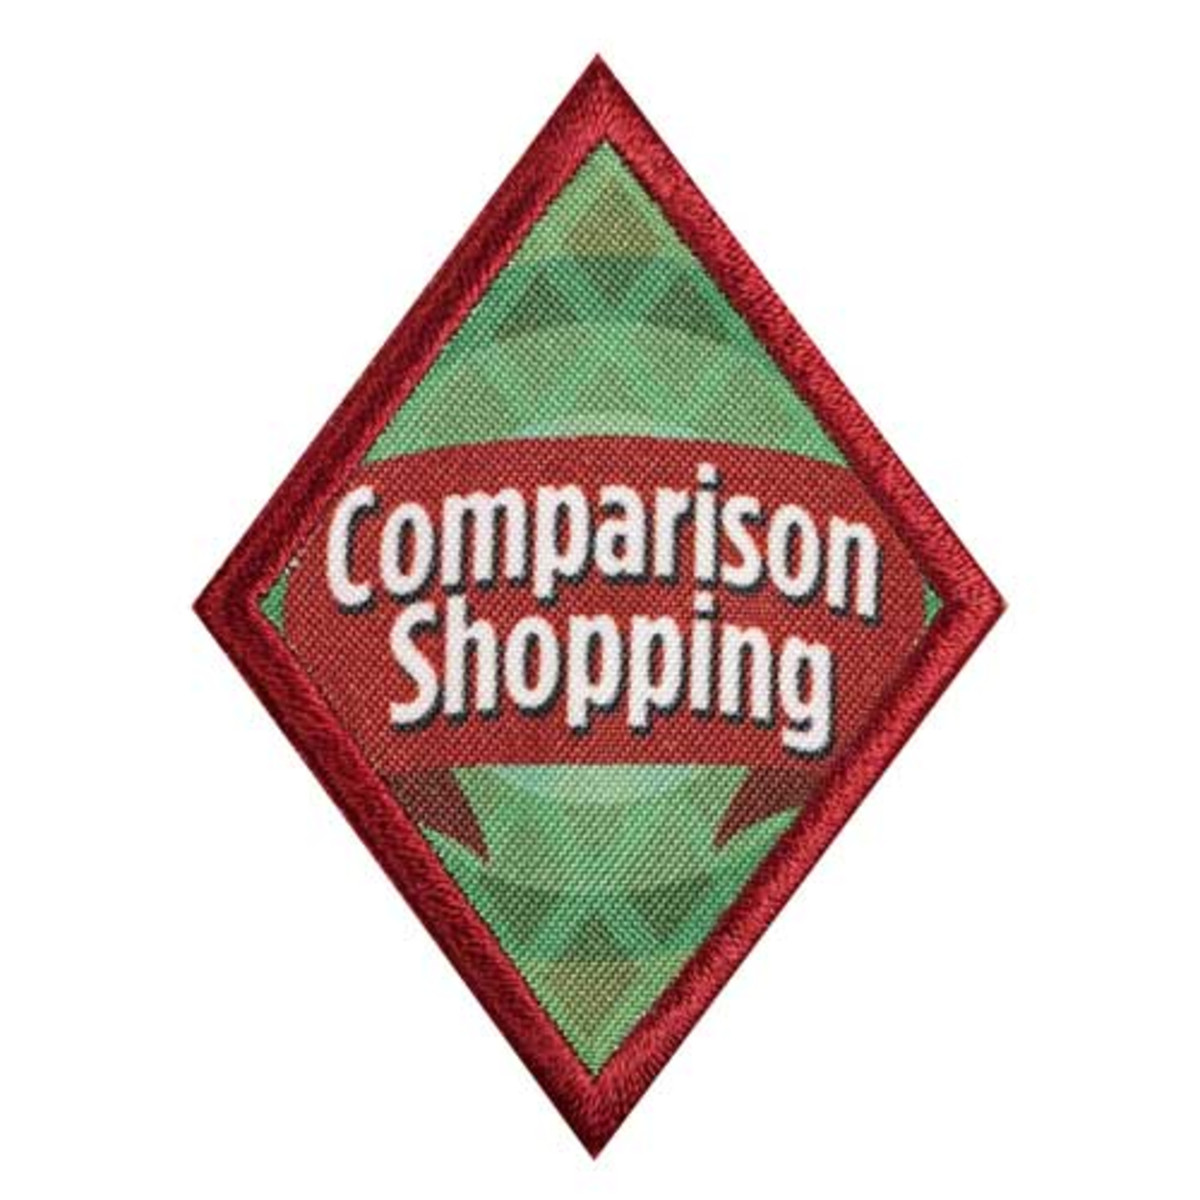 Cad. Comparison Shopping